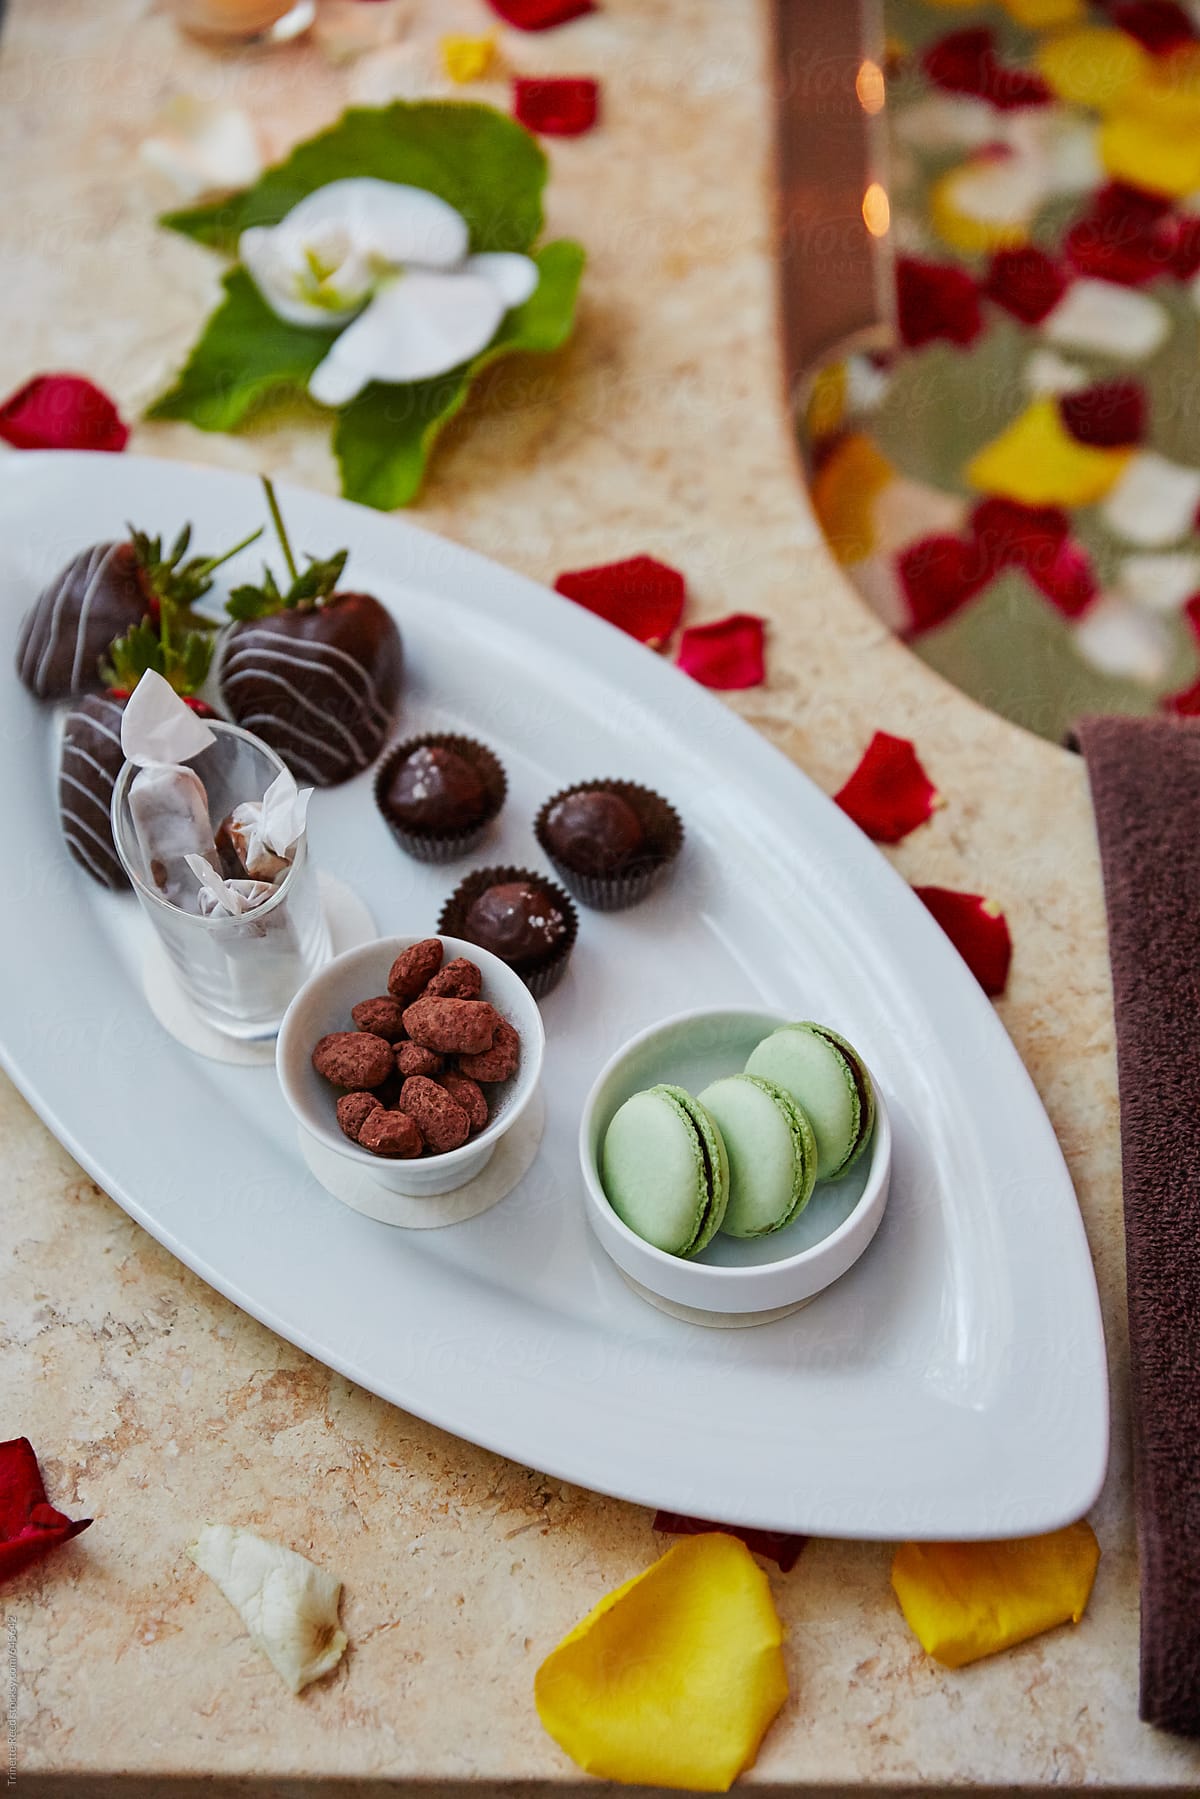 Sweet dessert treats on outdoor bathtub at luxury spa